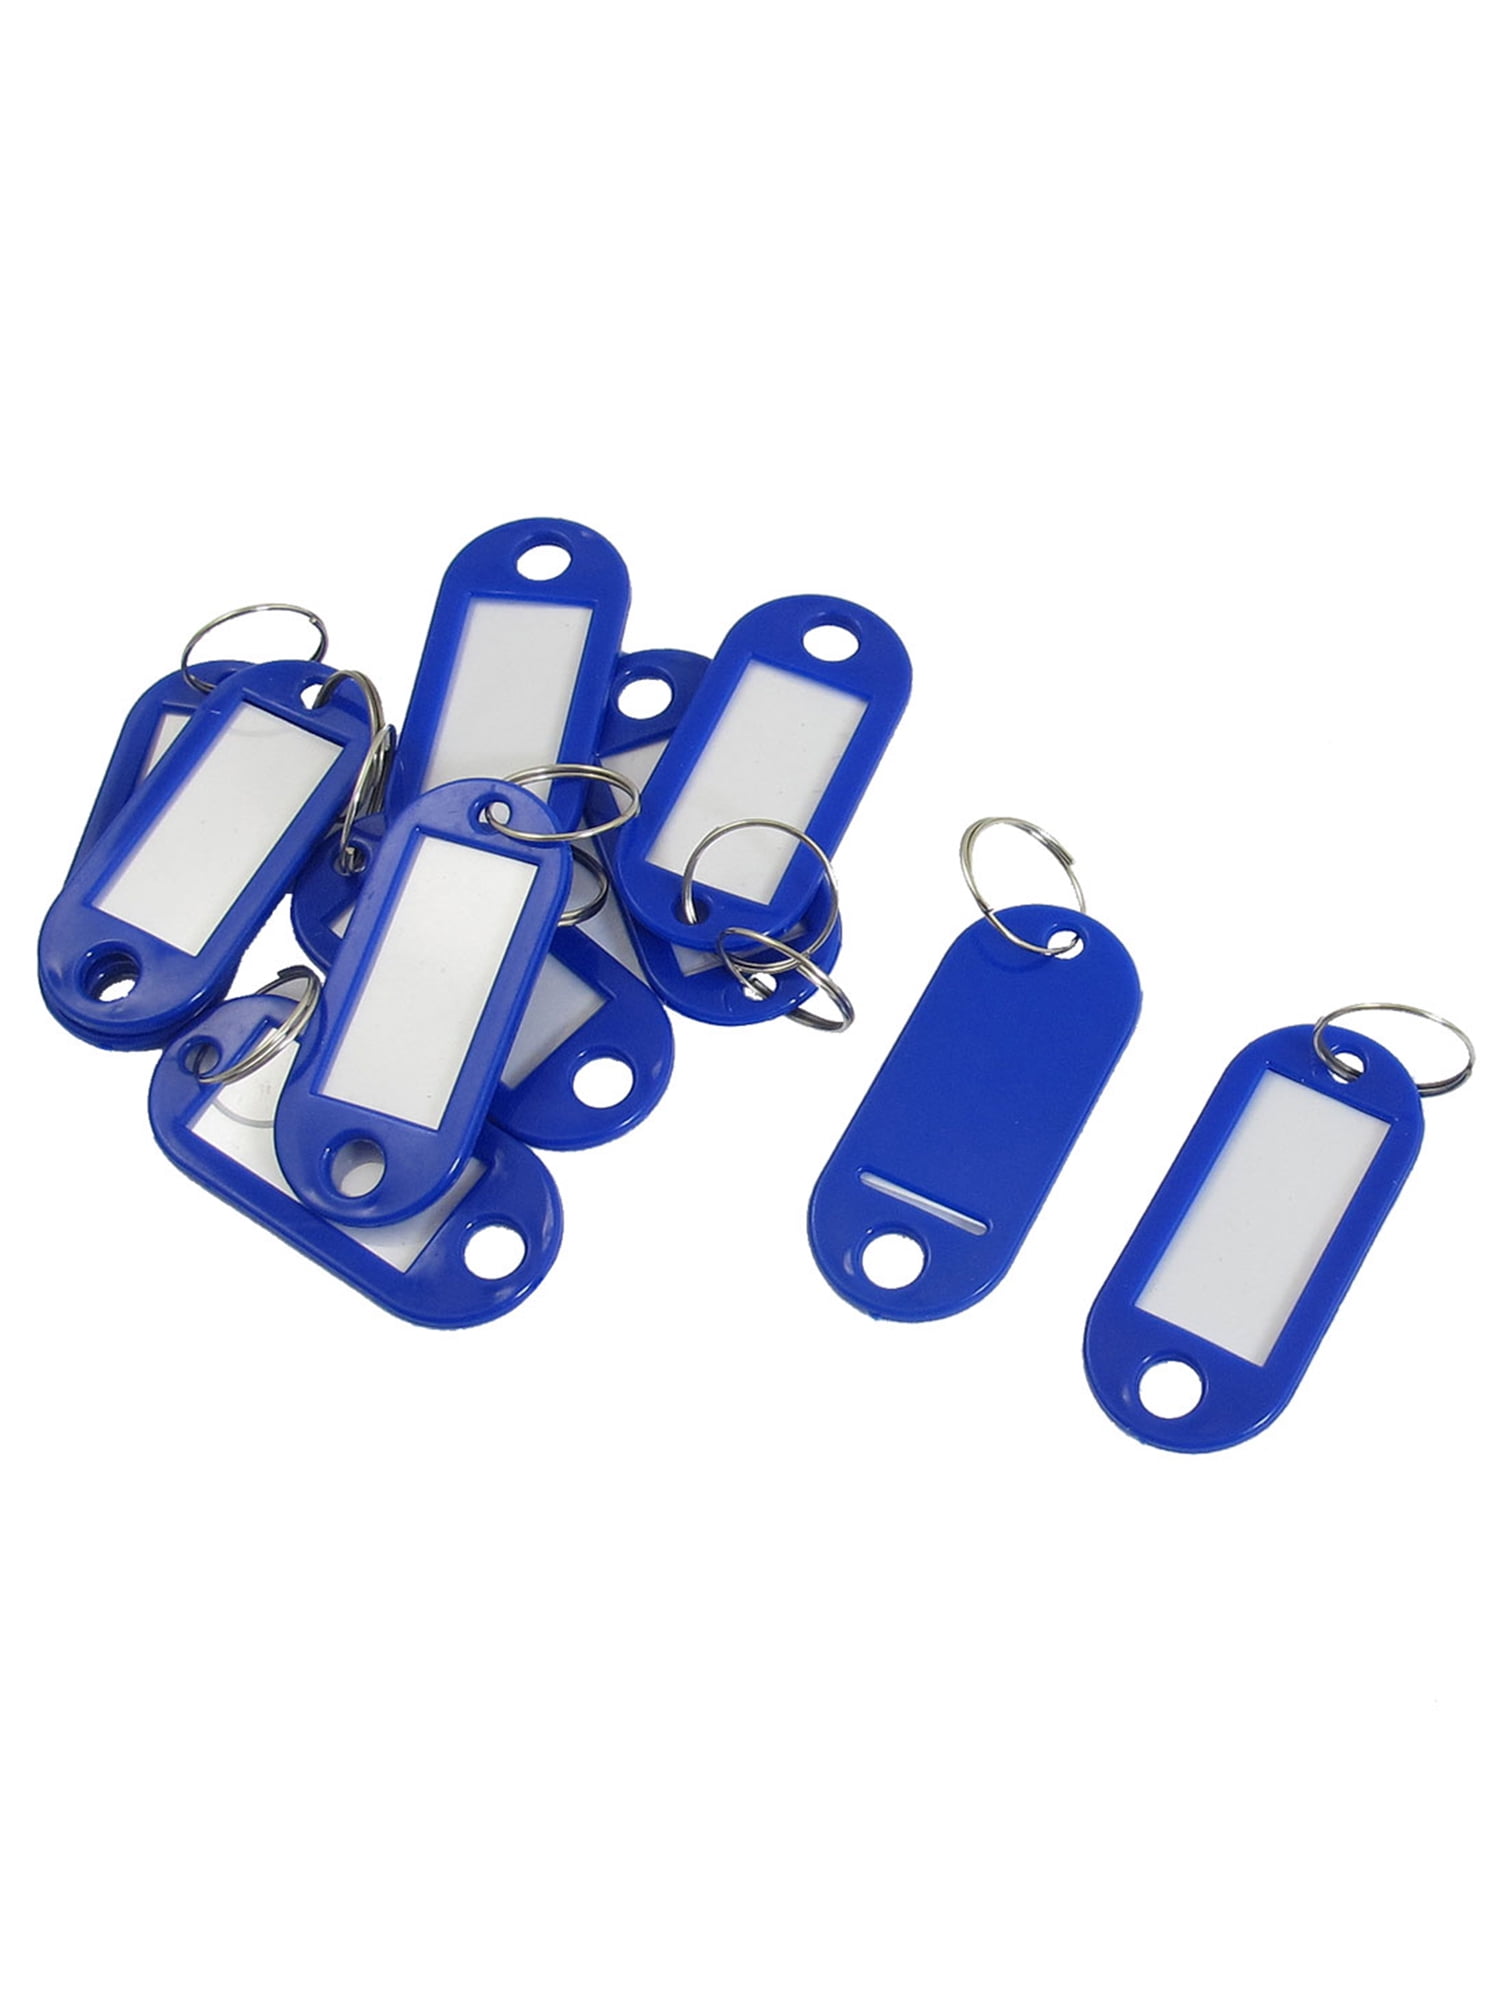 100pcs Plastic Key Tags Metal Ring Luggage Card Name Label Keychain W/Split Ring